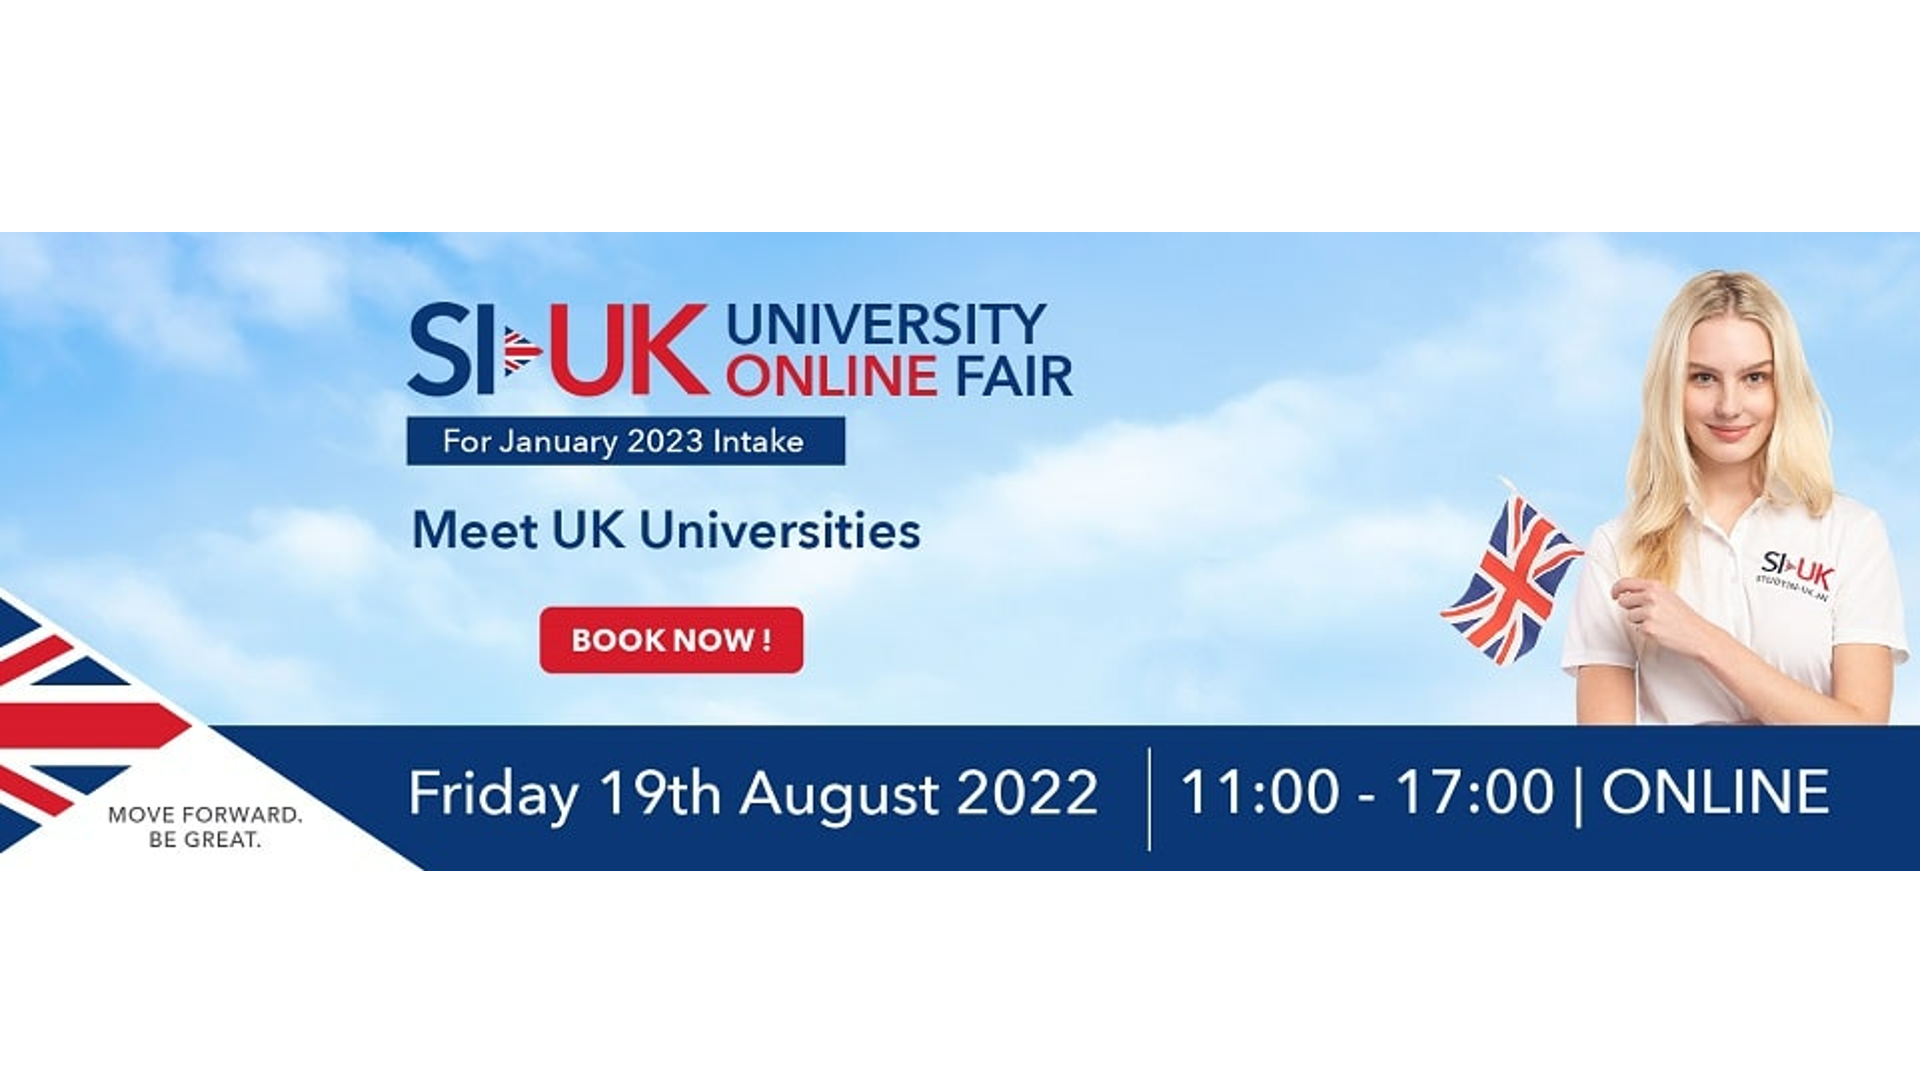 SI-UK University Fair Chandigarh 2022, Online Event